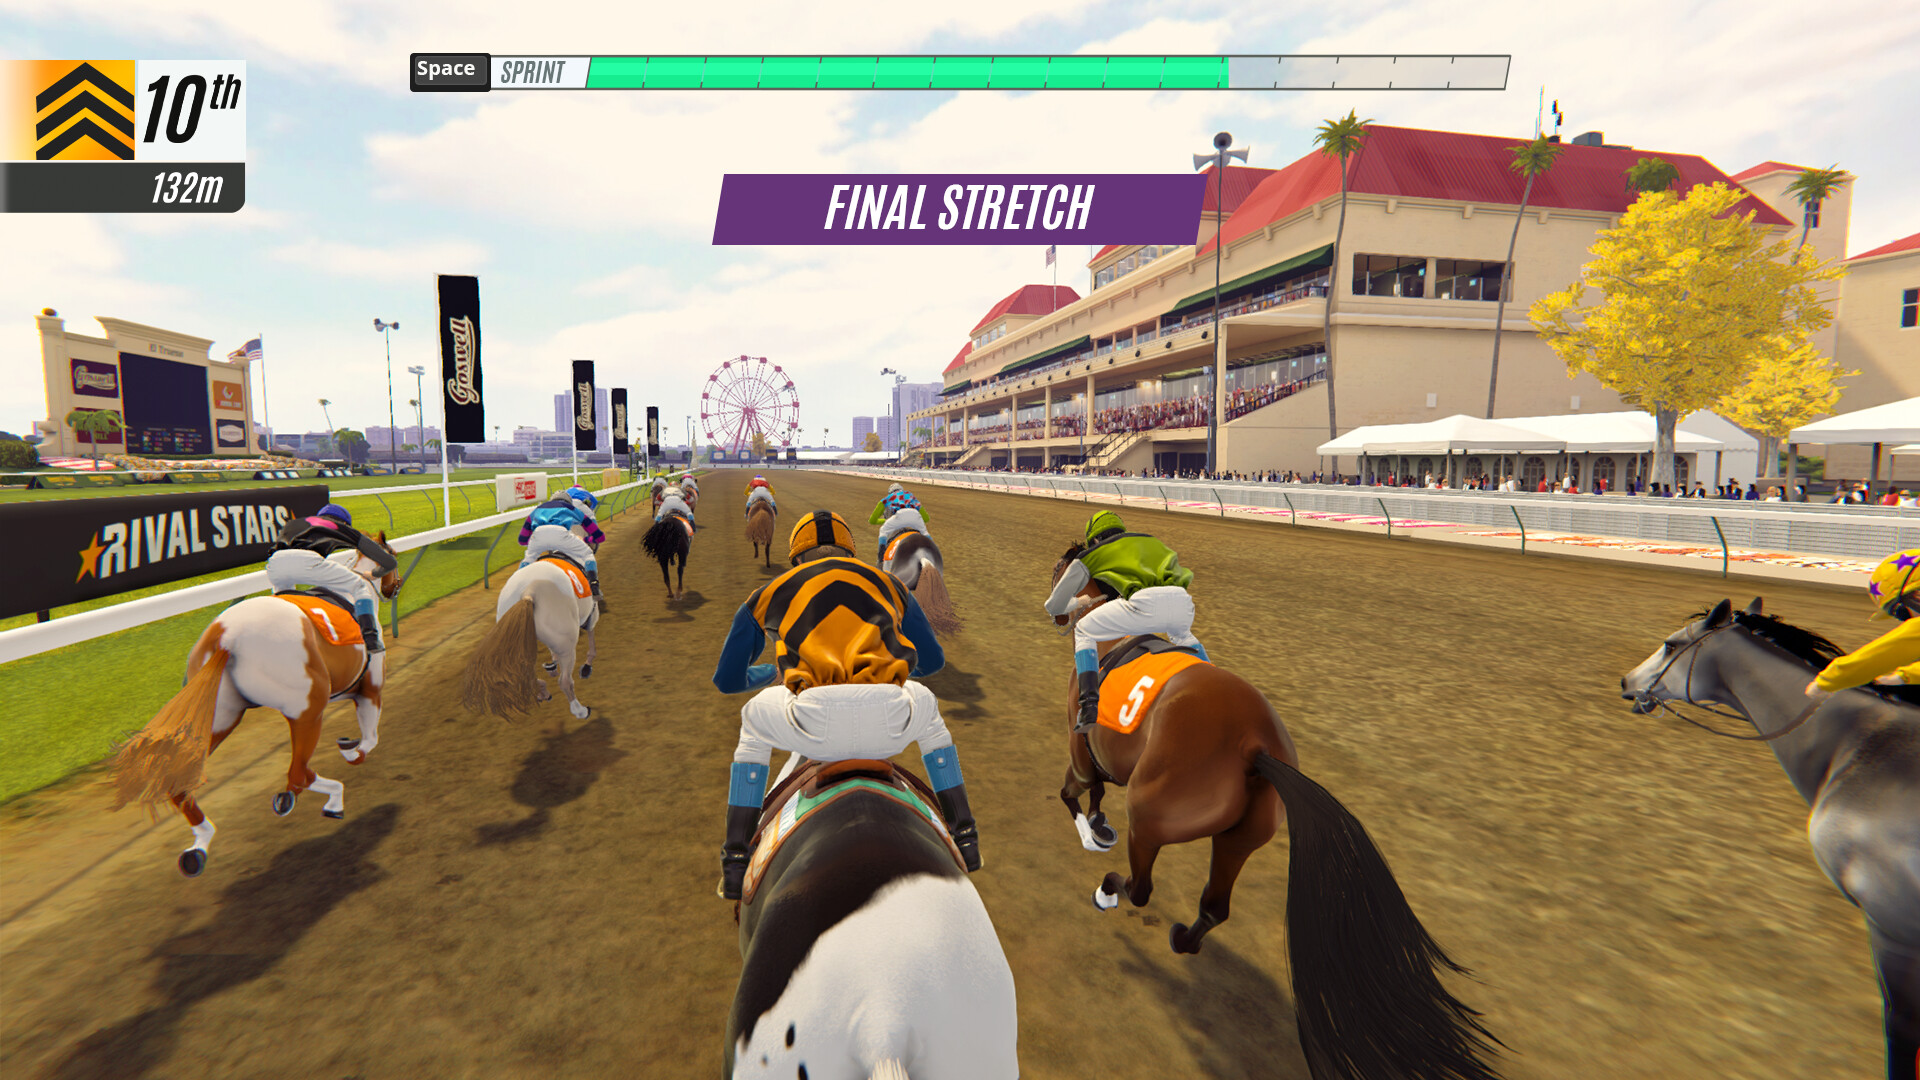 Rival Stars Horse Racing na App Store